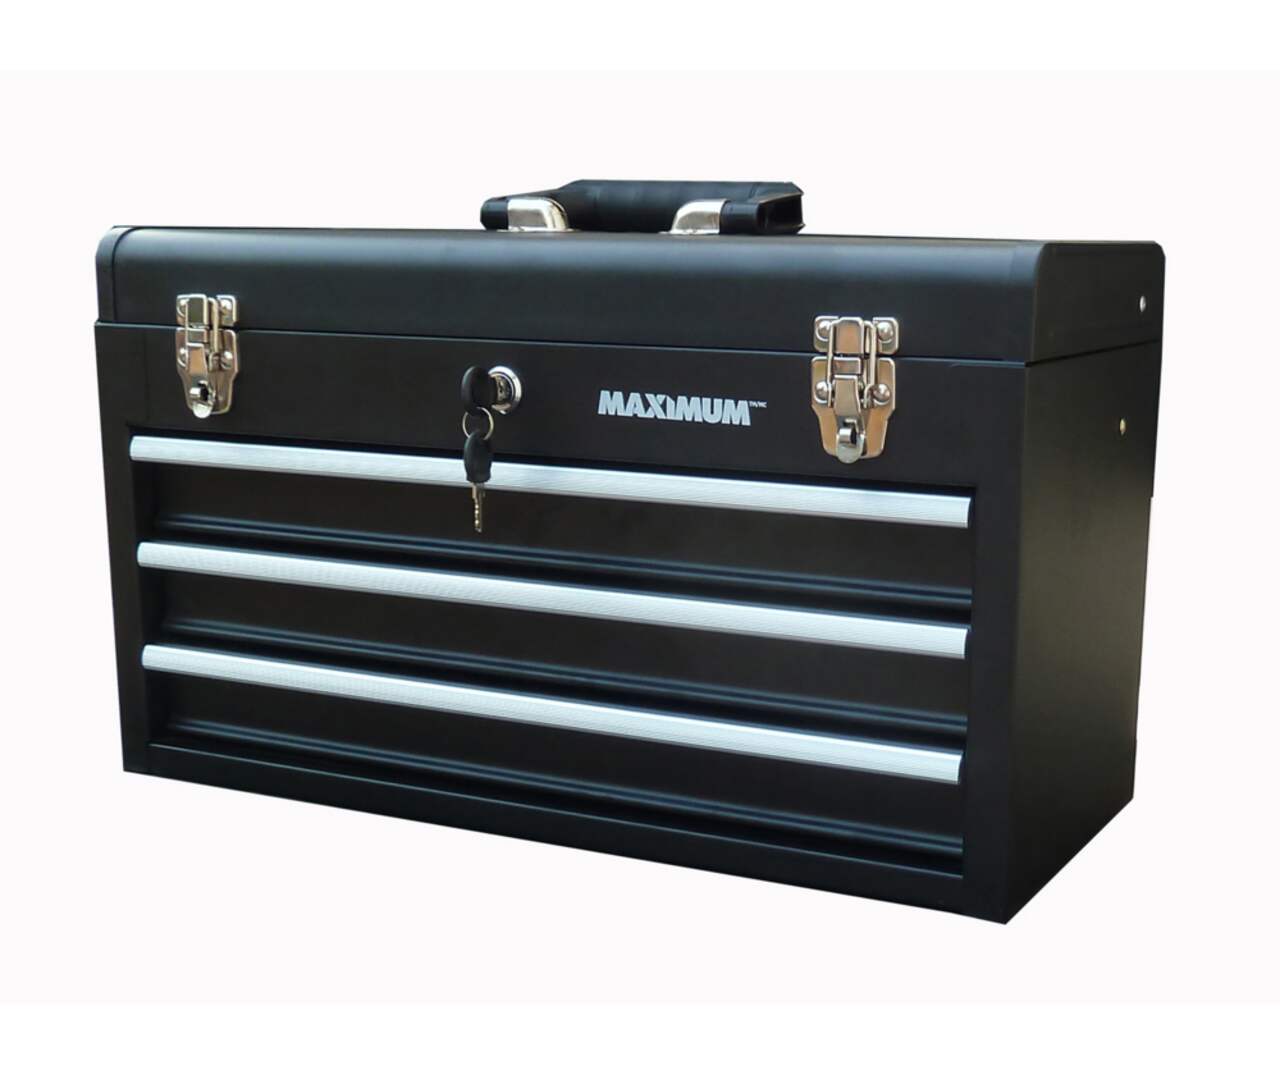 MAXIMUM Portable Metal Tool Box w/ 3- Drawers, Black, 21-in